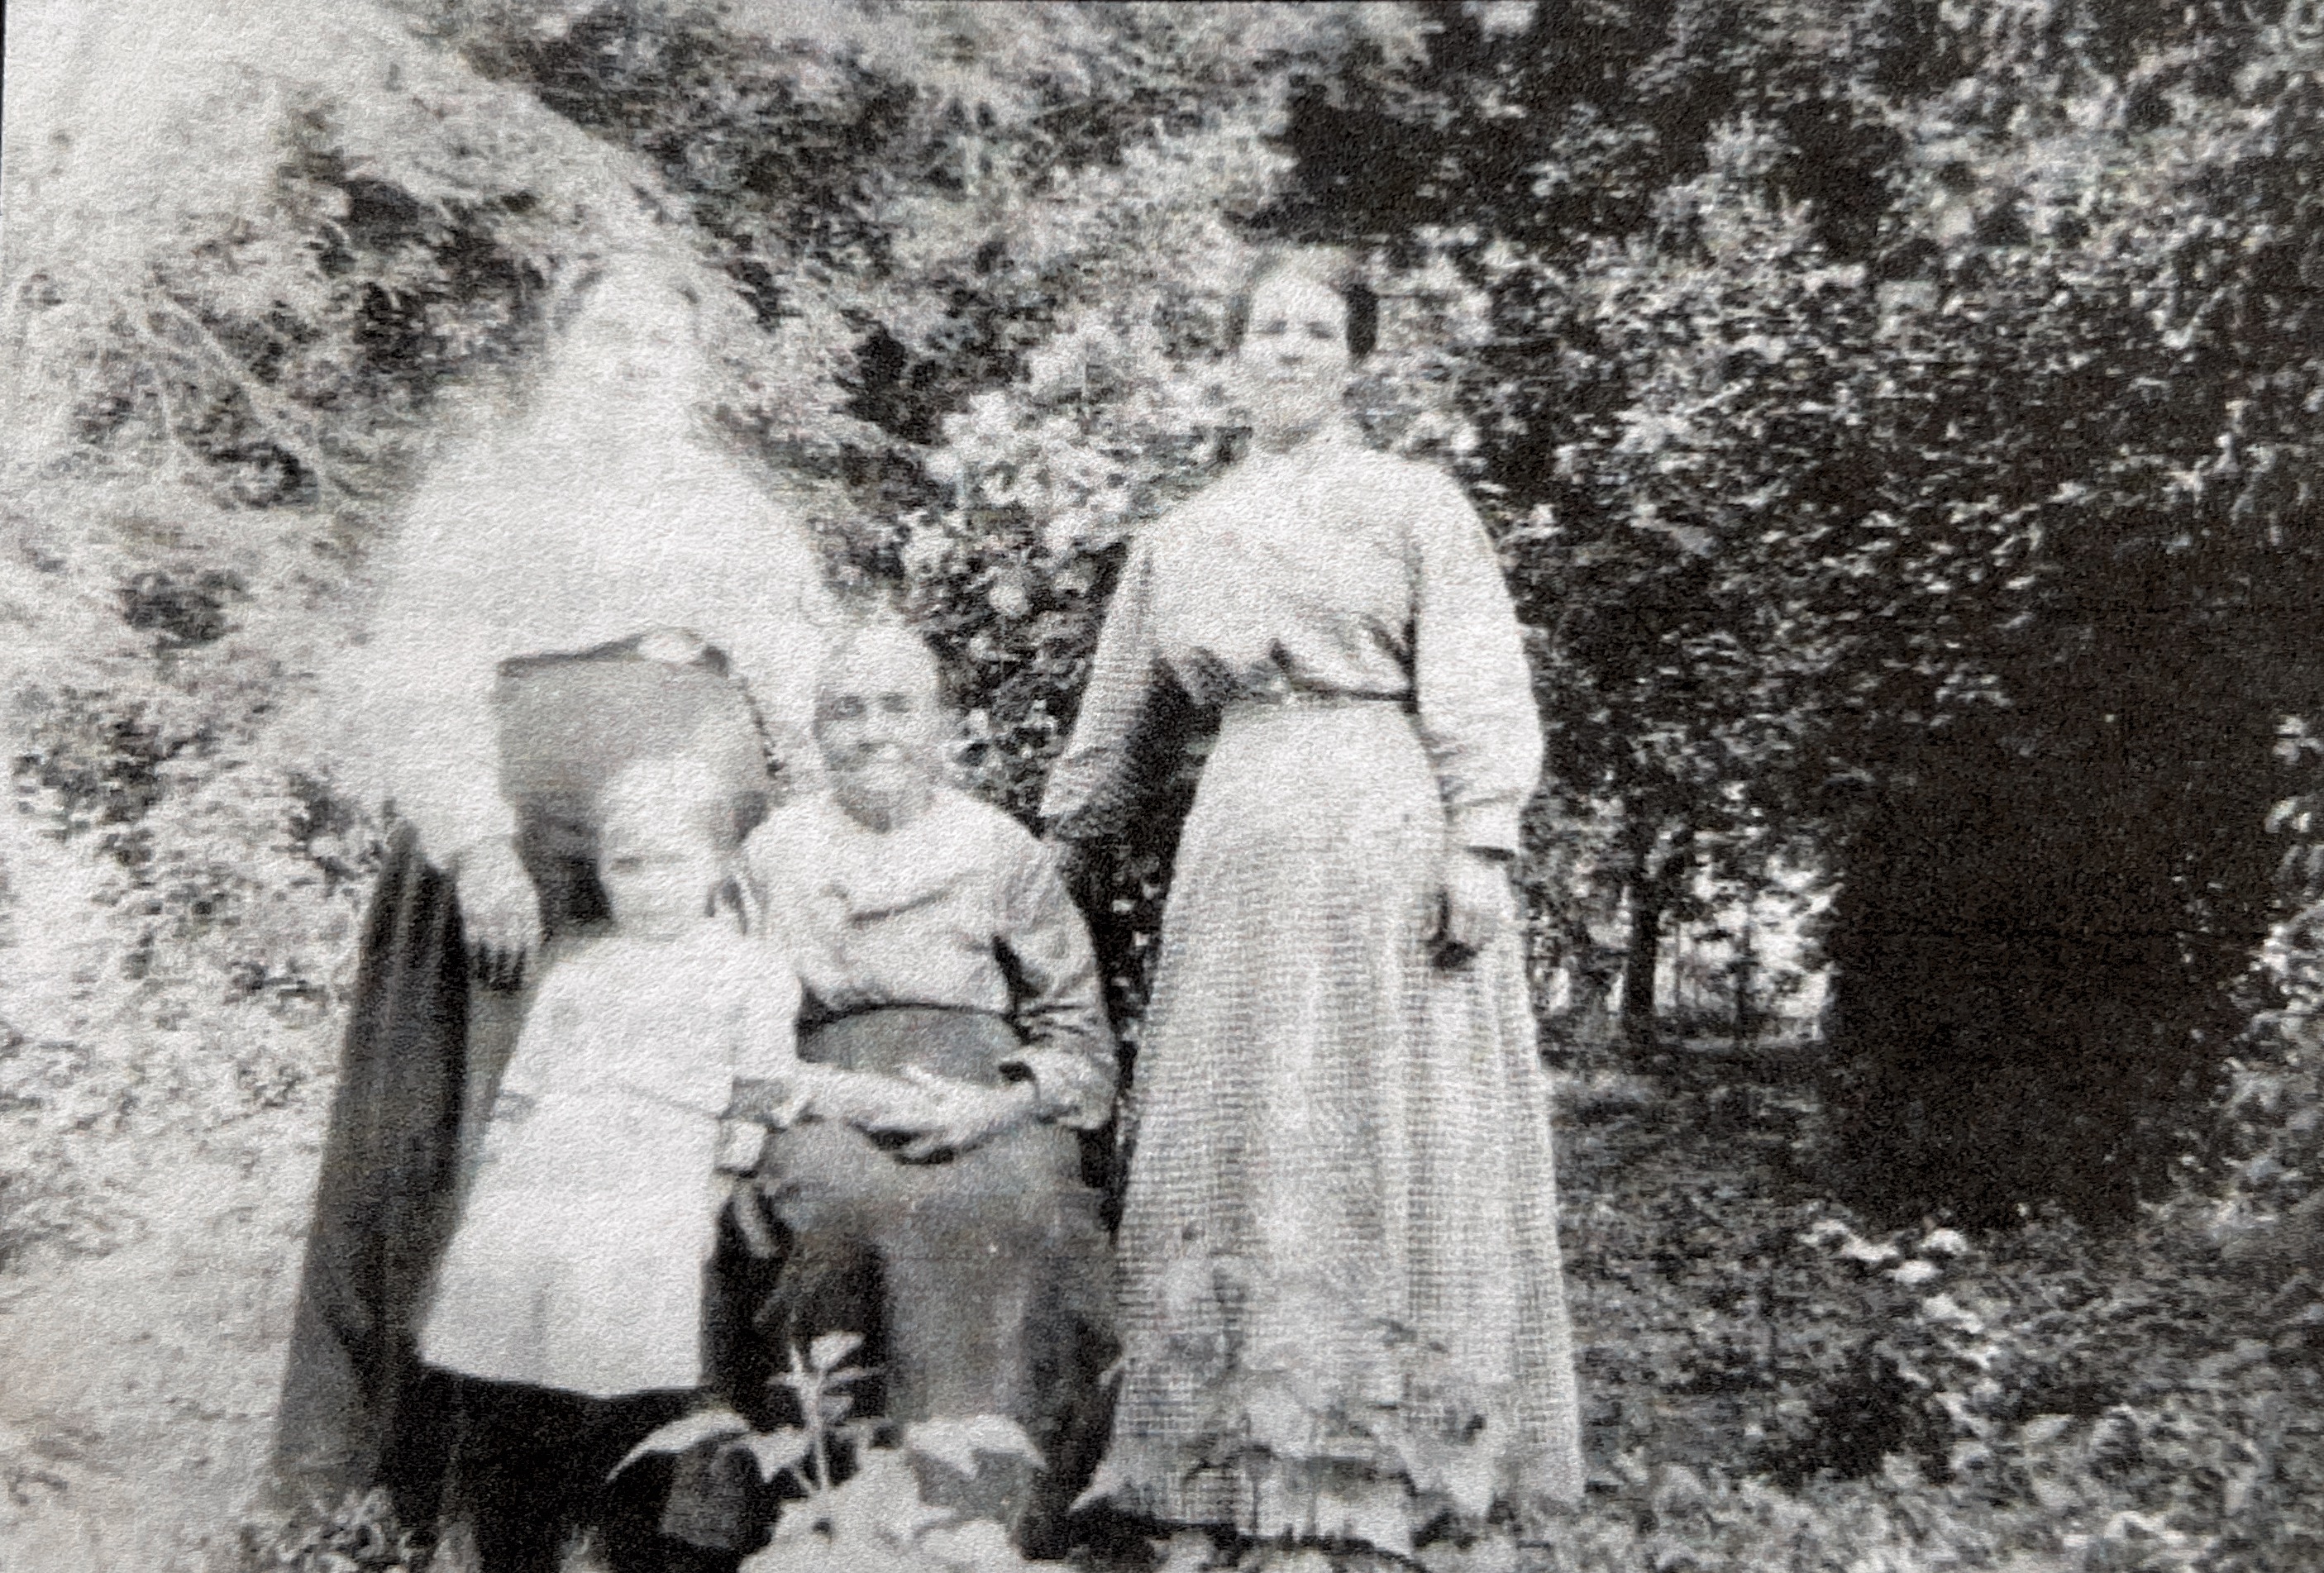 Four generations circa 1913. Seated, Seviah Cunningham Egbert. Standing, Sarah Catherine Egbert Despain and Edna Seviah Despain Dickson. The child is Edna Cathern Dickson Karlinsey.